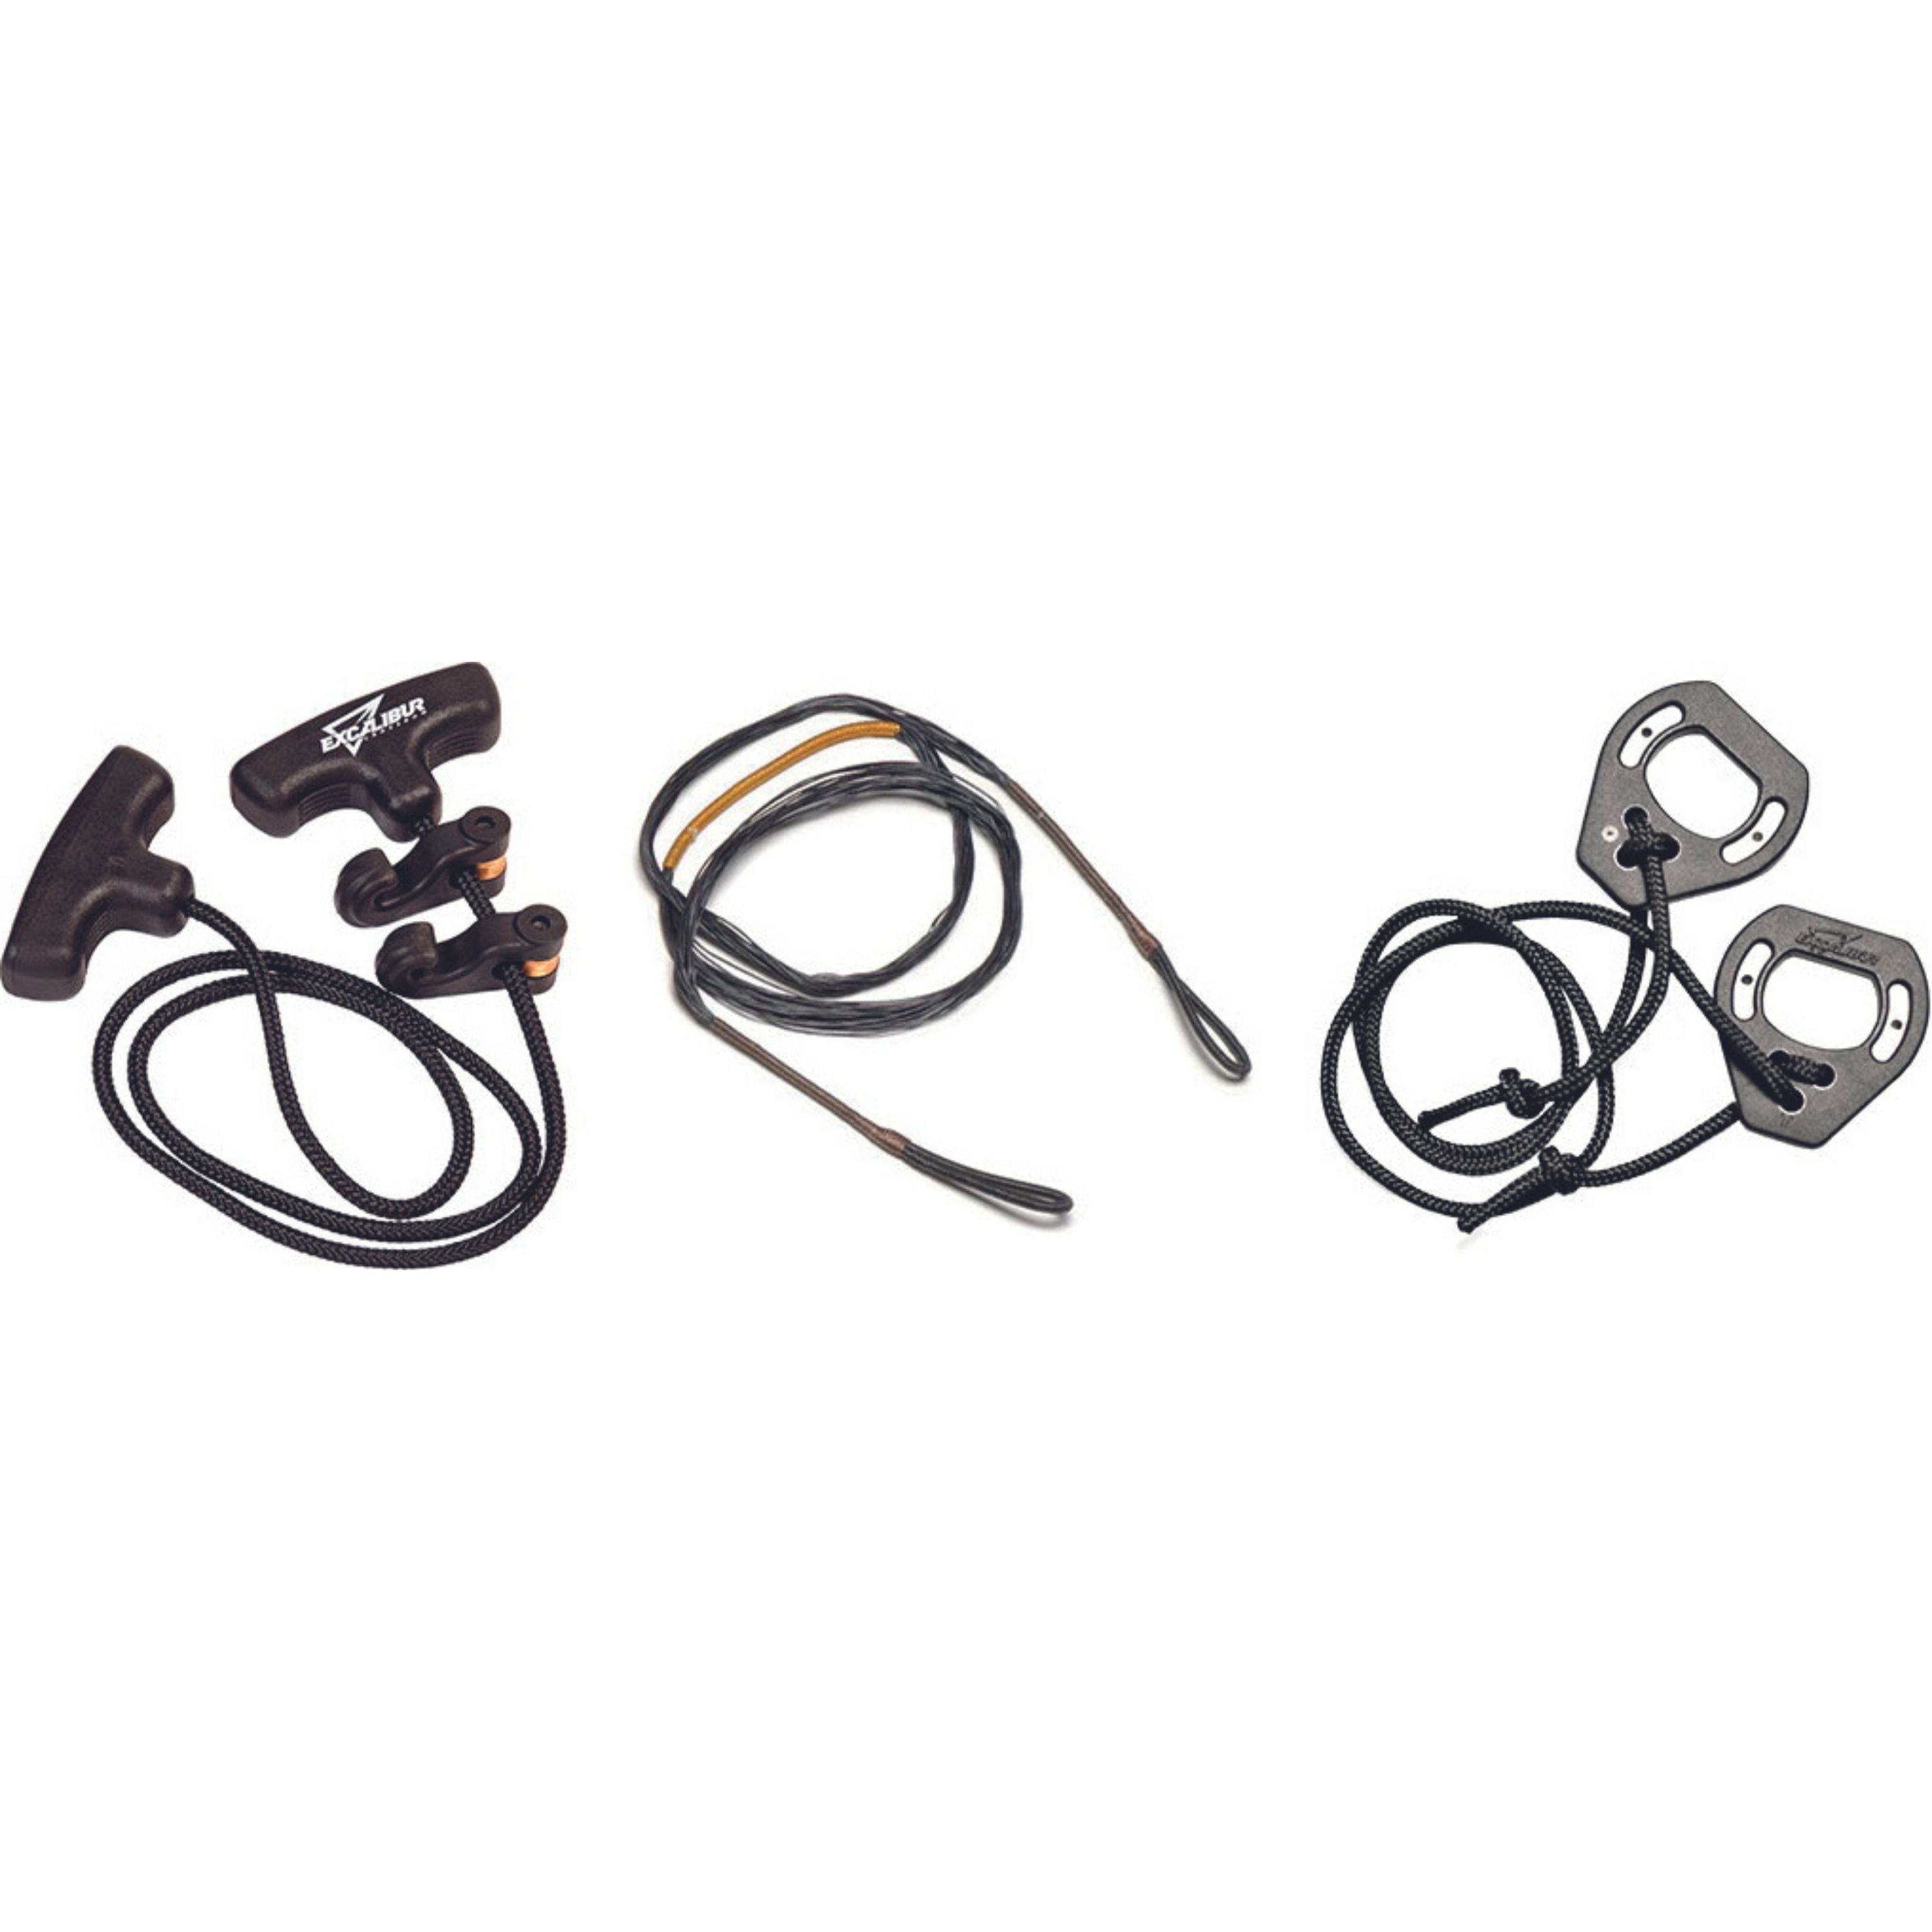 Micro survival string maintenance kit